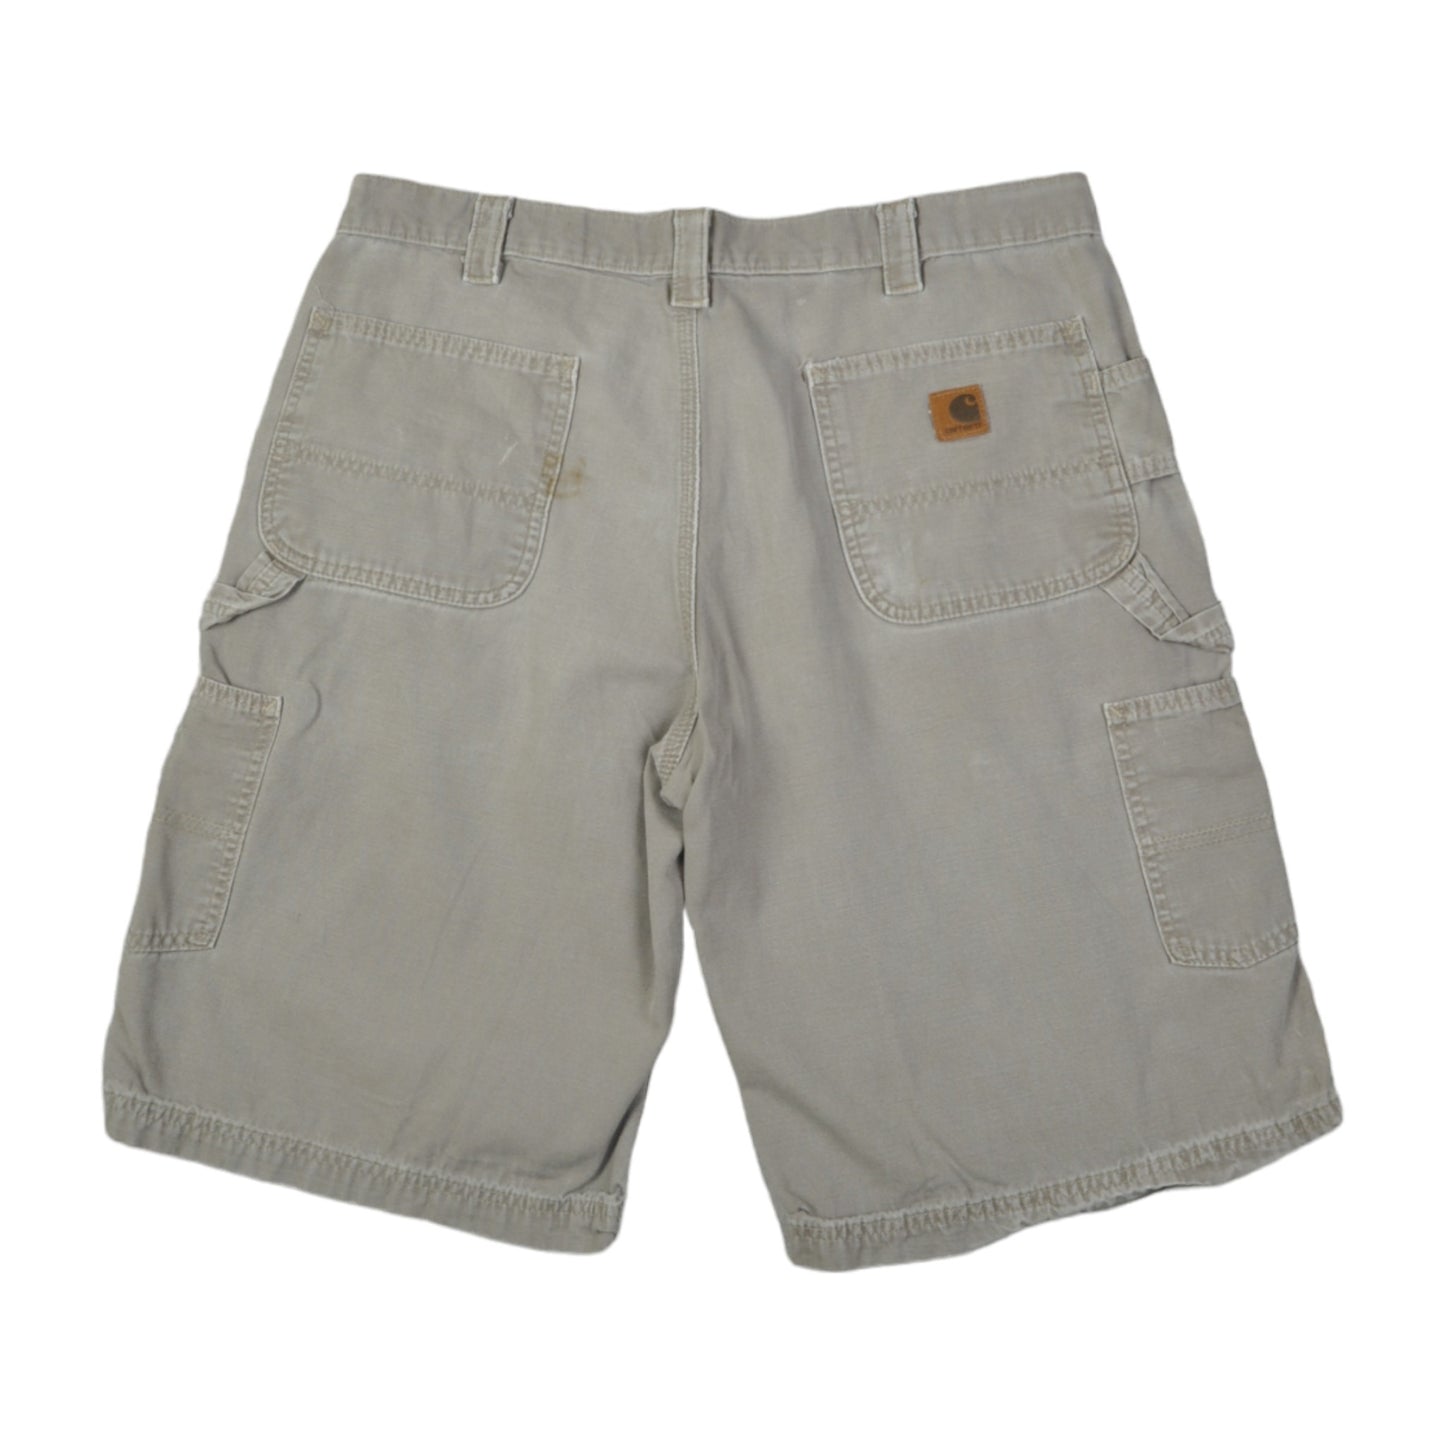 Vintage Carhartt Workwear Casual Shorts Gret W36